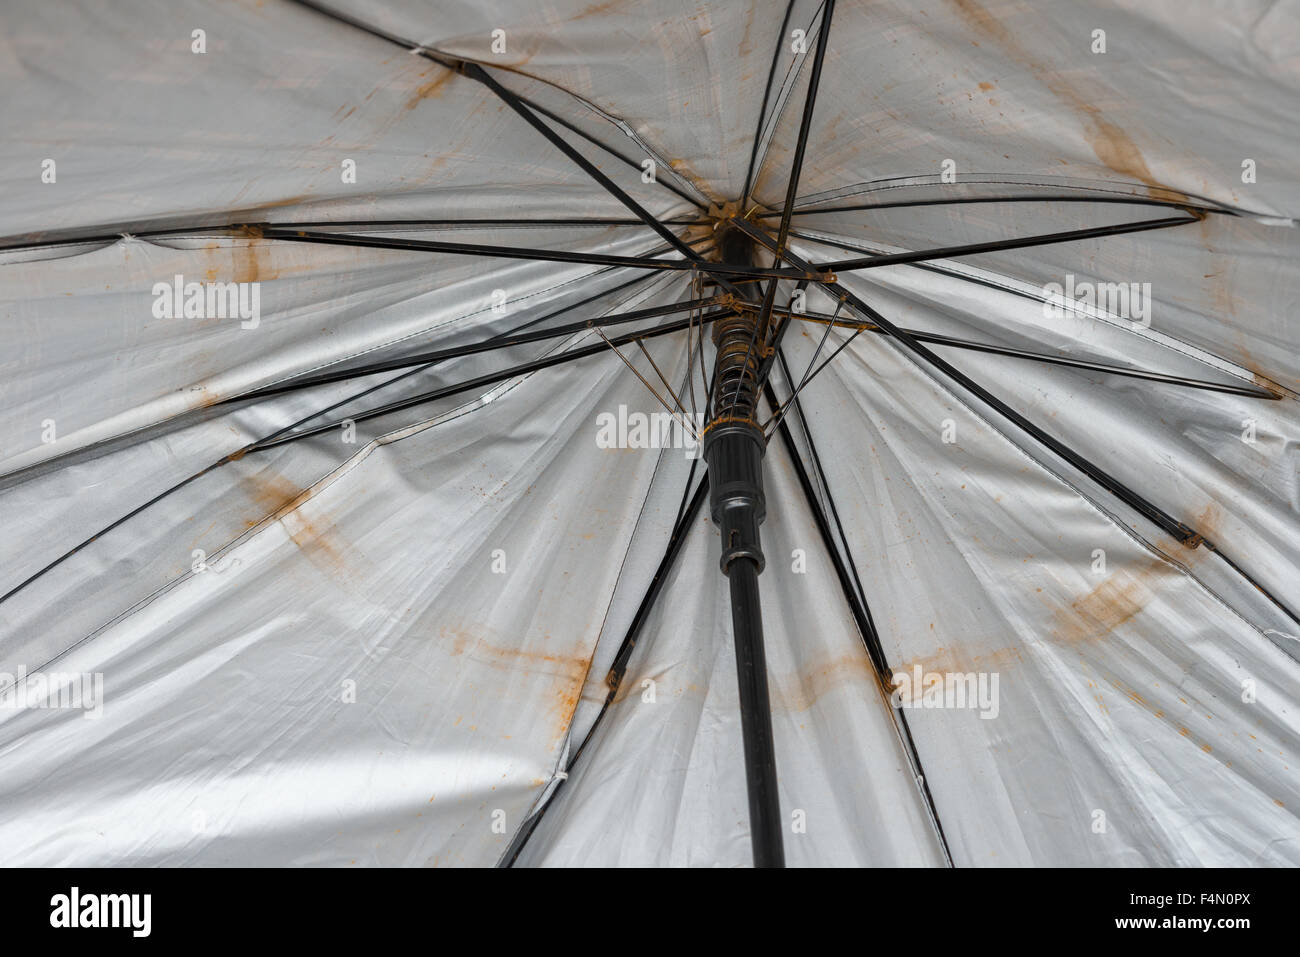 rusty and broken umbrella inside Stock Photo